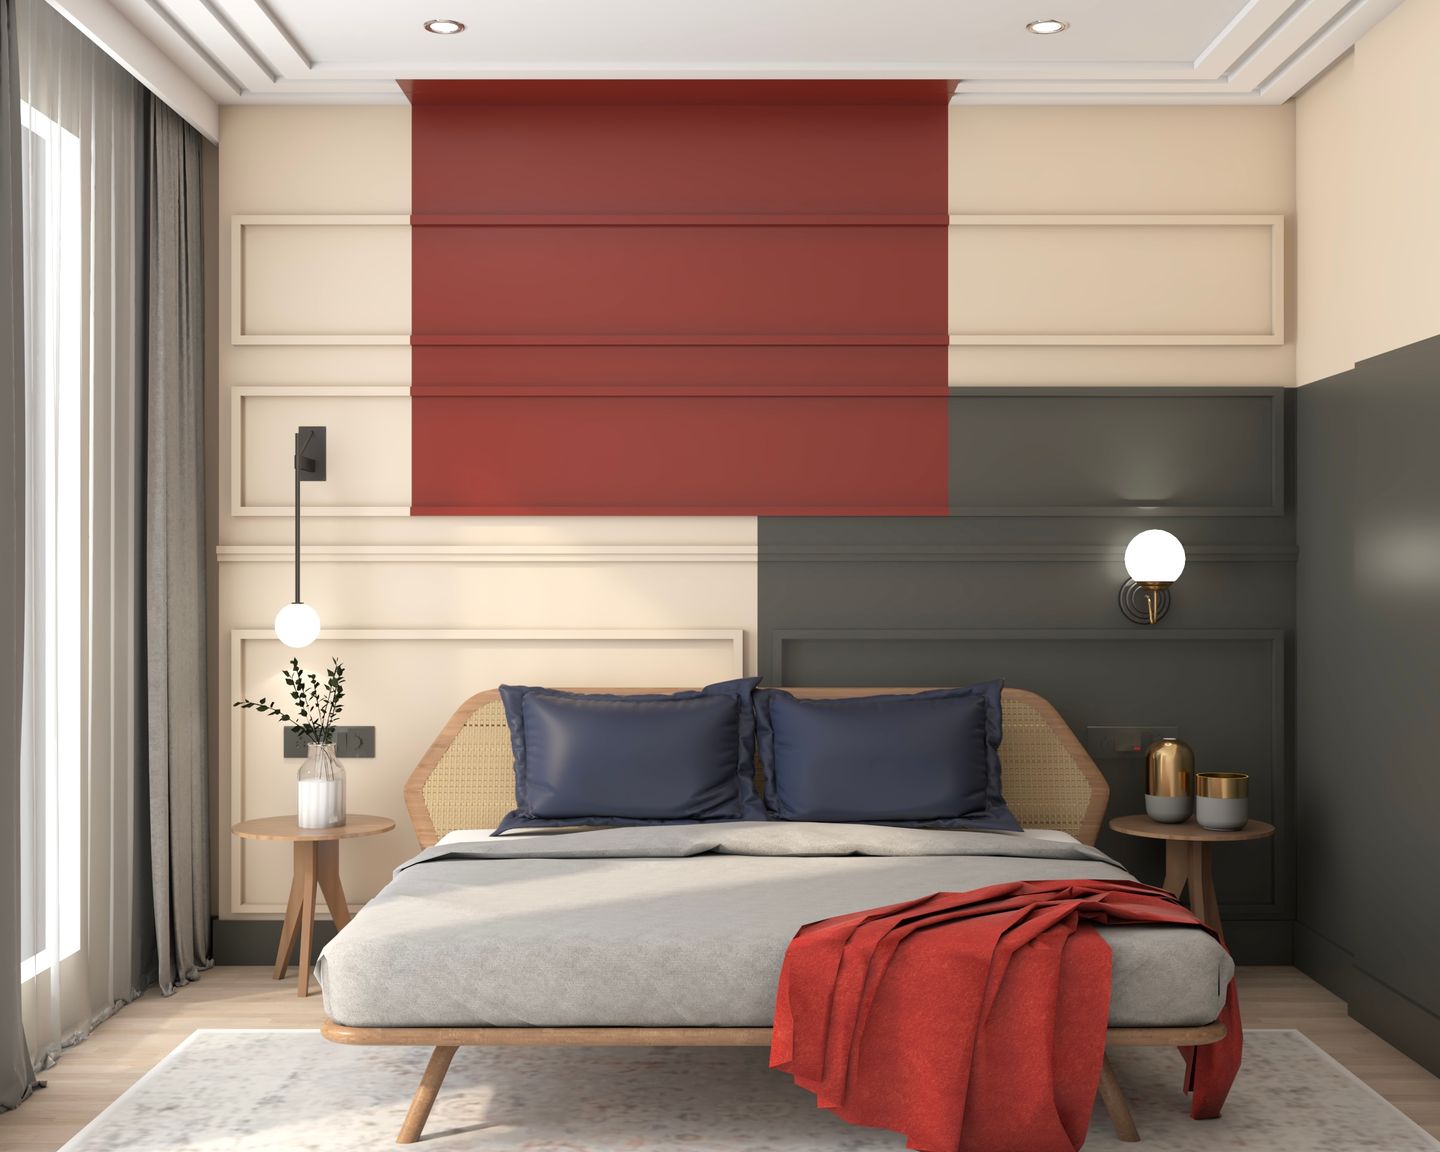 Colourful Bedroom Wall Design - Livspace